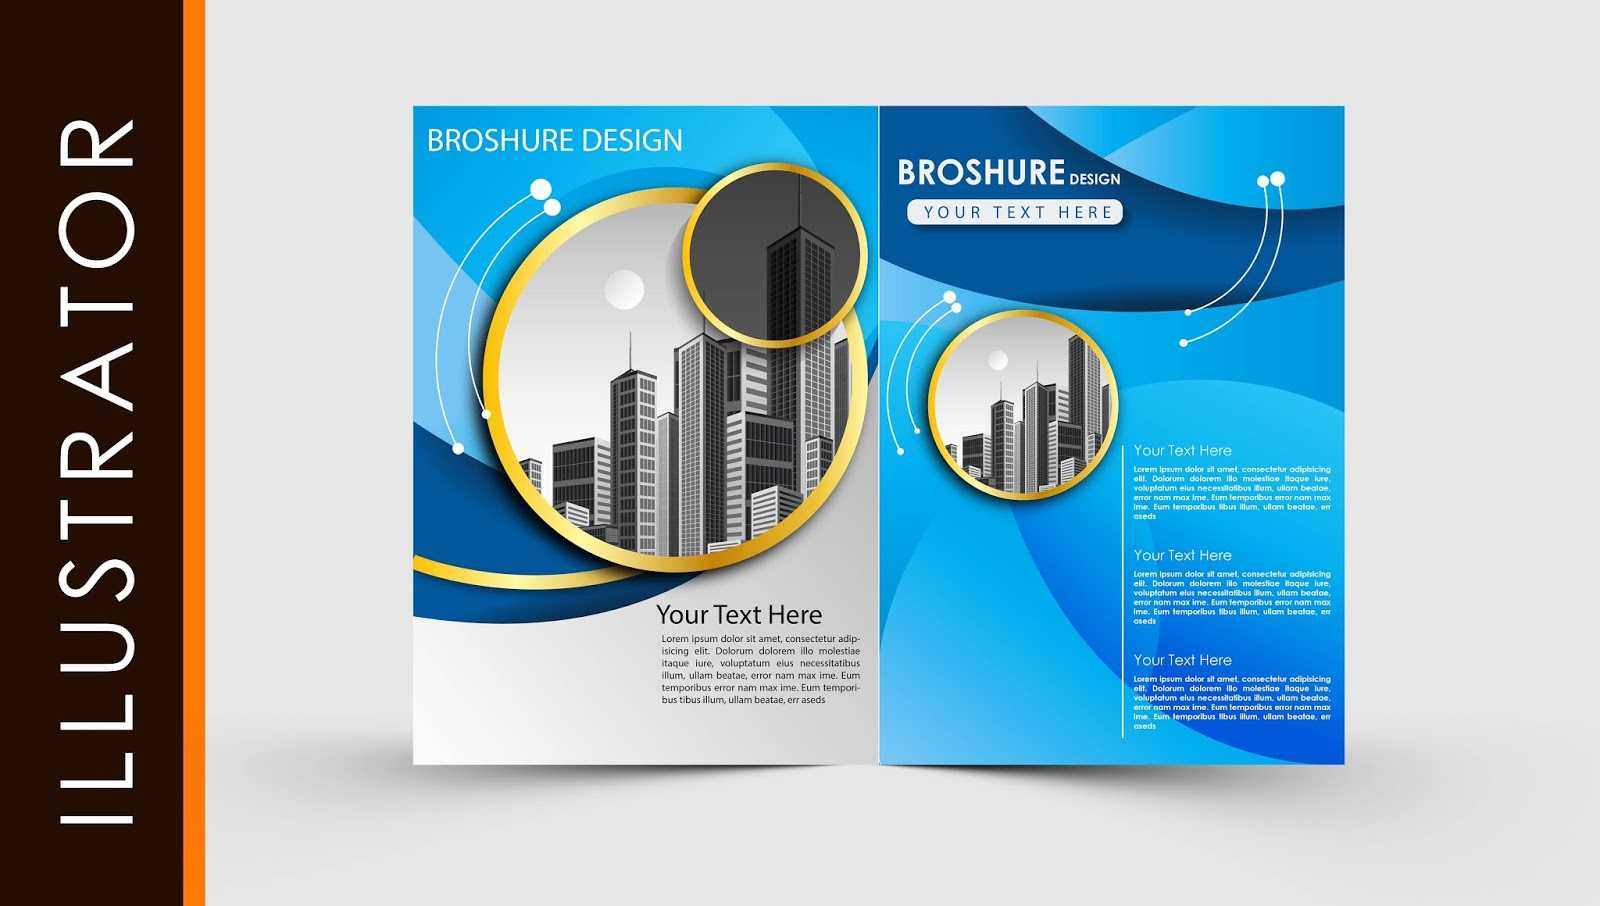 Free Download Adobe Illustrator Template Brochure Two Fold Inside Free Illustrator Brochure Templates Download